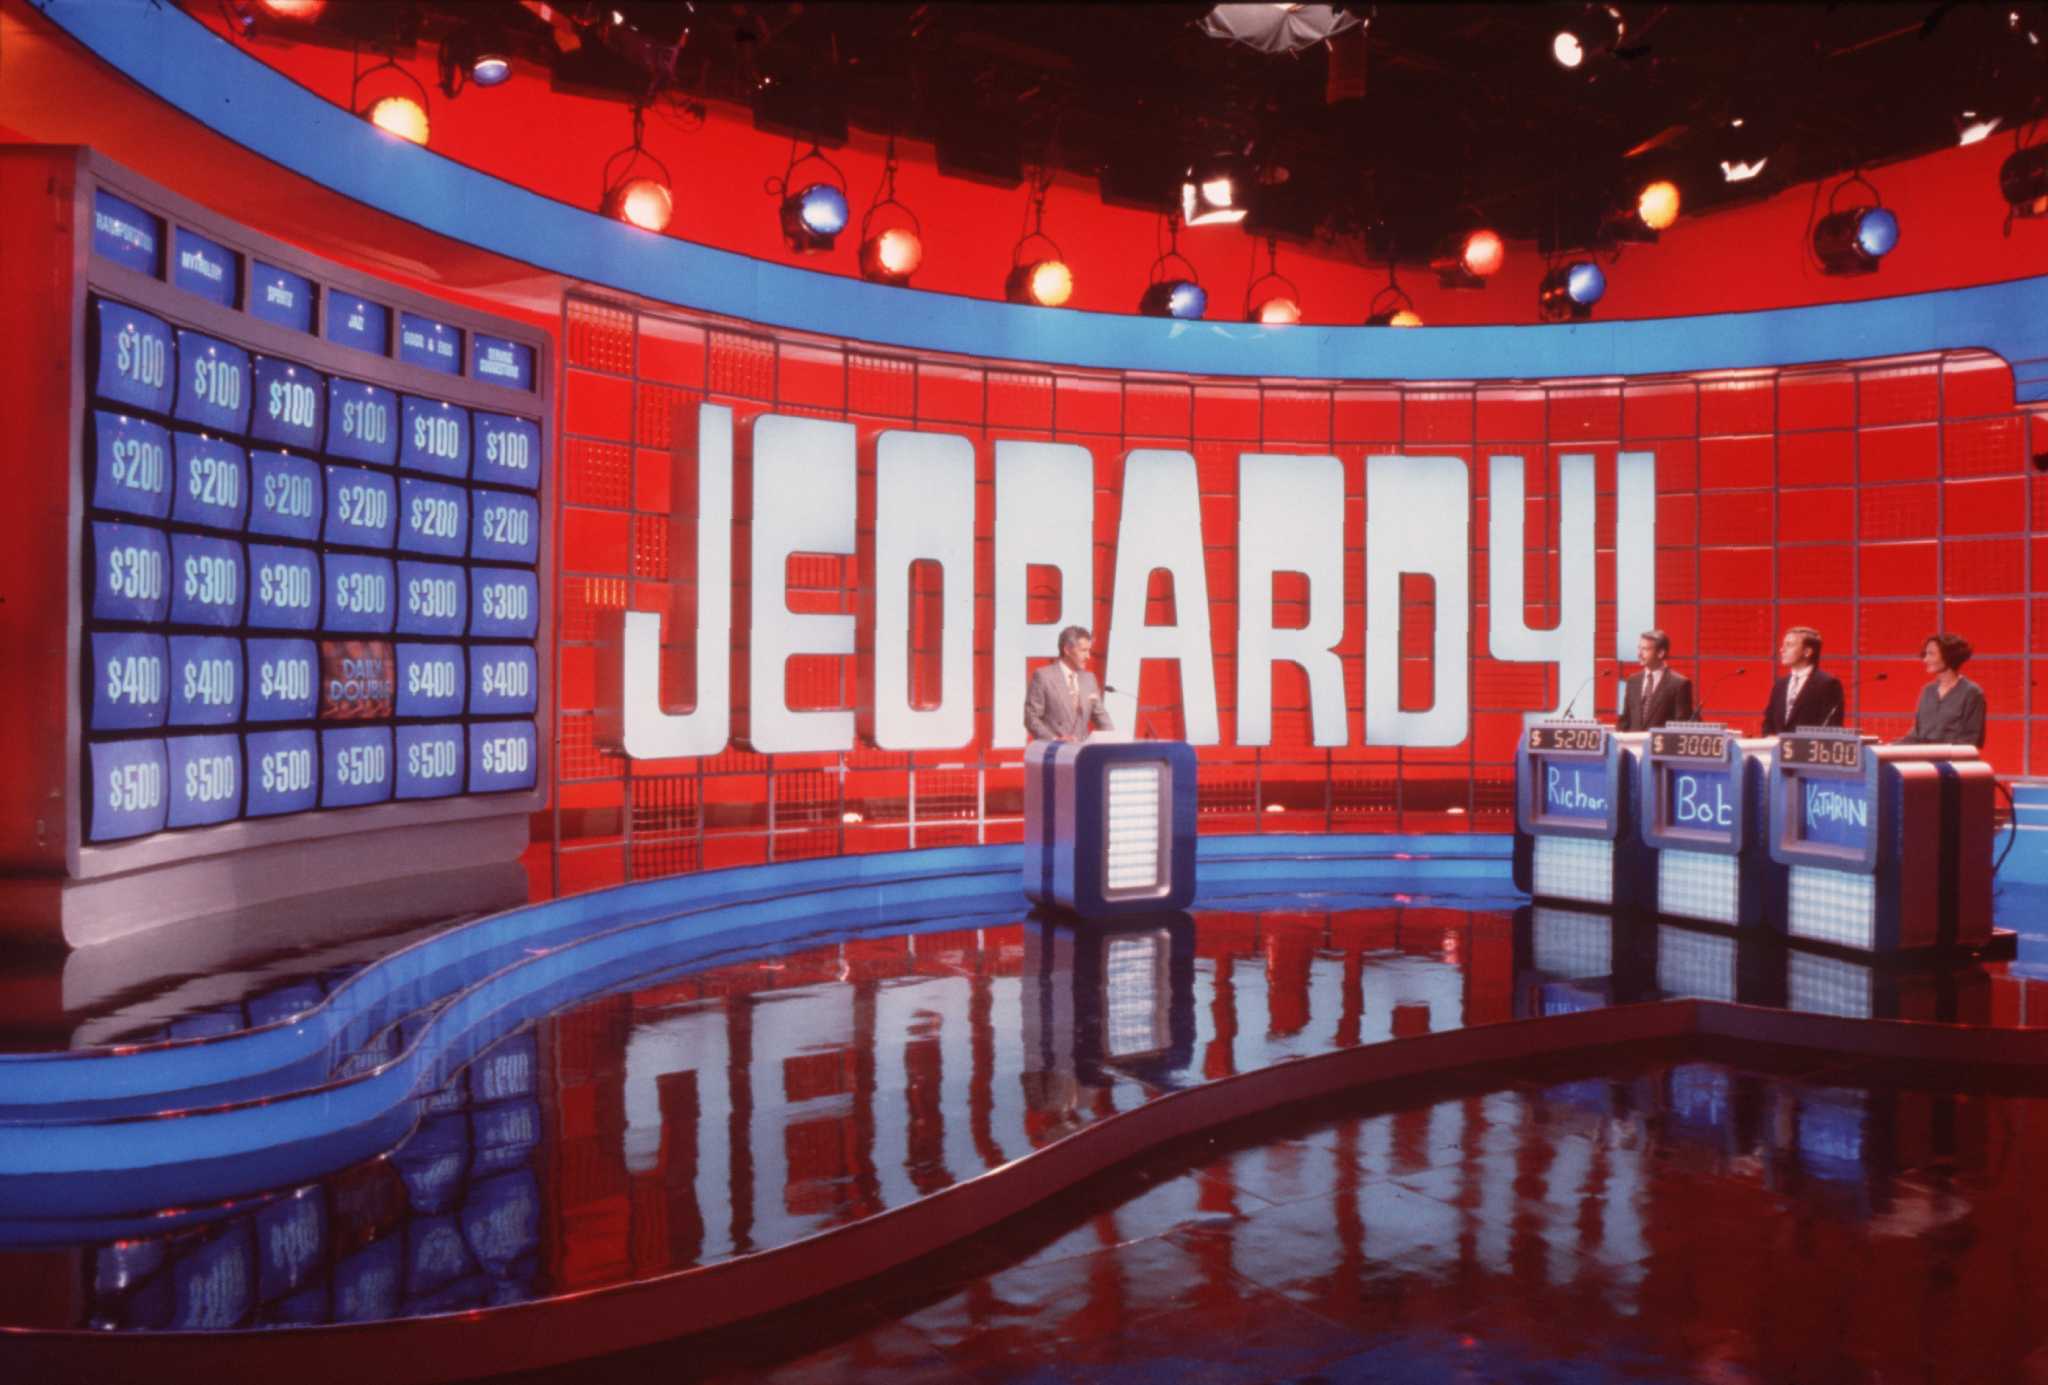 Video game show. Jeopardy. Телевизионные игры. Jeopardy! Телепередача. Студия Gameshow.